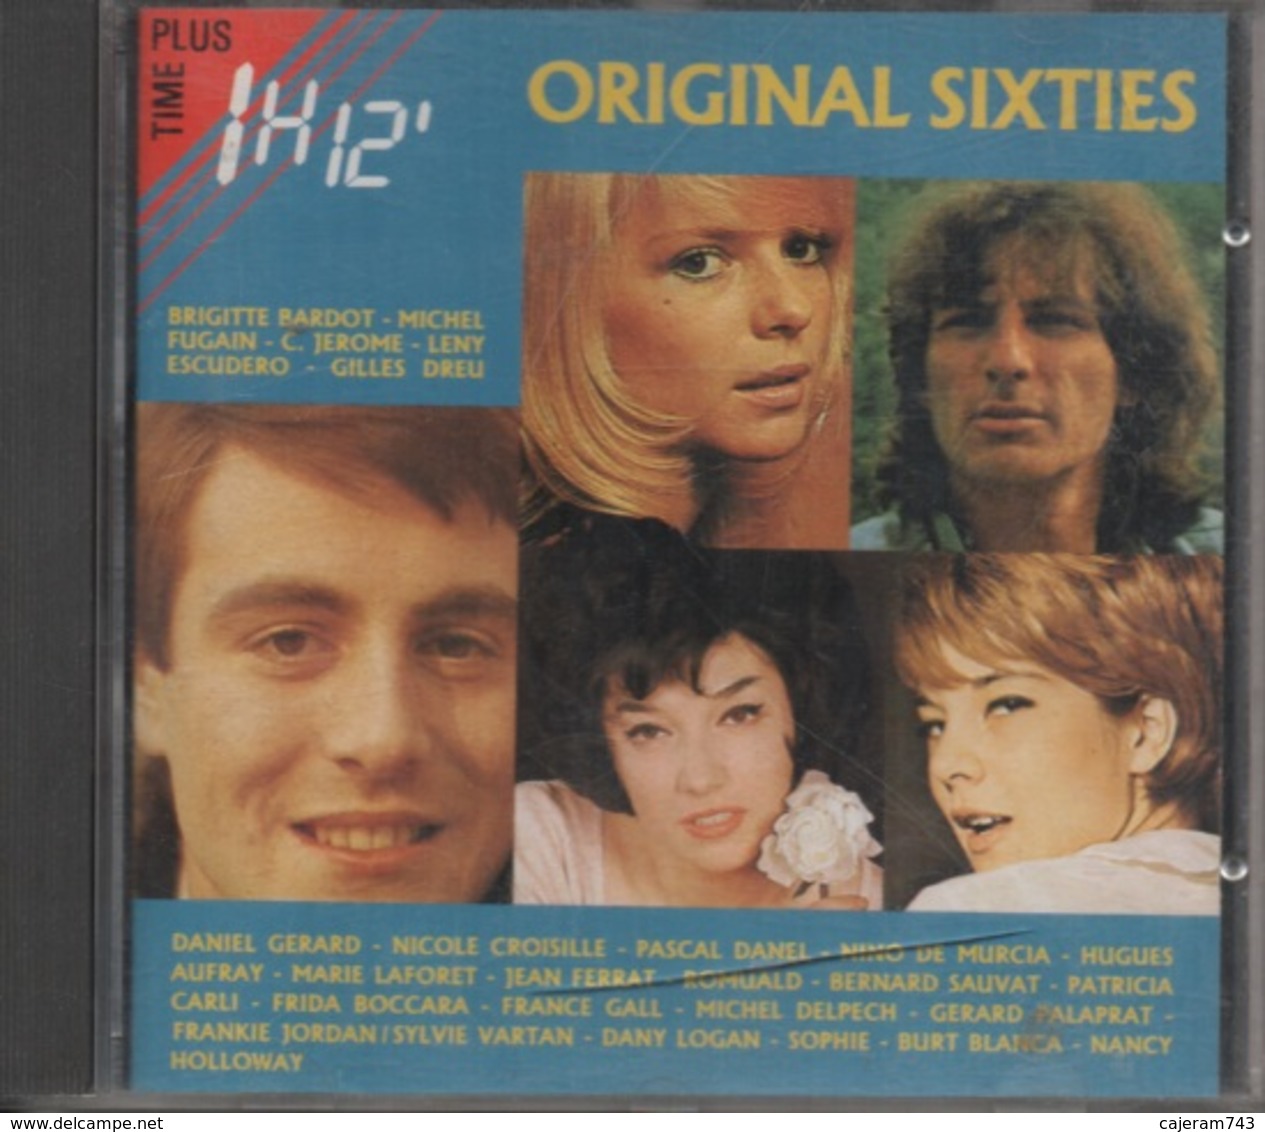 CD. ORIGINAL SIXTIES. Brigitte BARDOT - ROMUALD - France GALL - Dany LOGAN - Sylvie VARTAN - Leny ESCUDERO - Jean FERRAT - Hit-Compilations